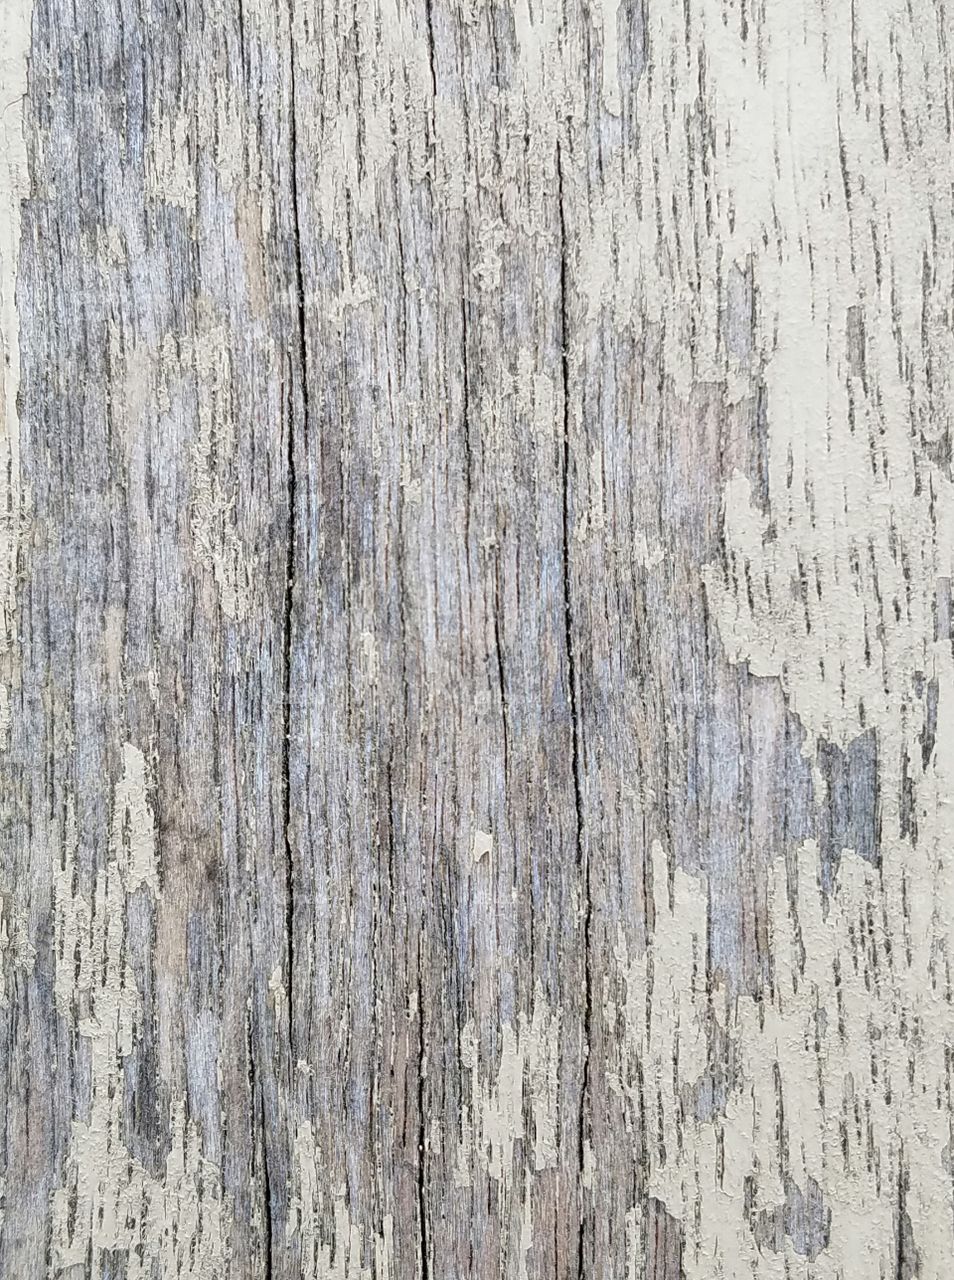 Wood And Peeling Paint